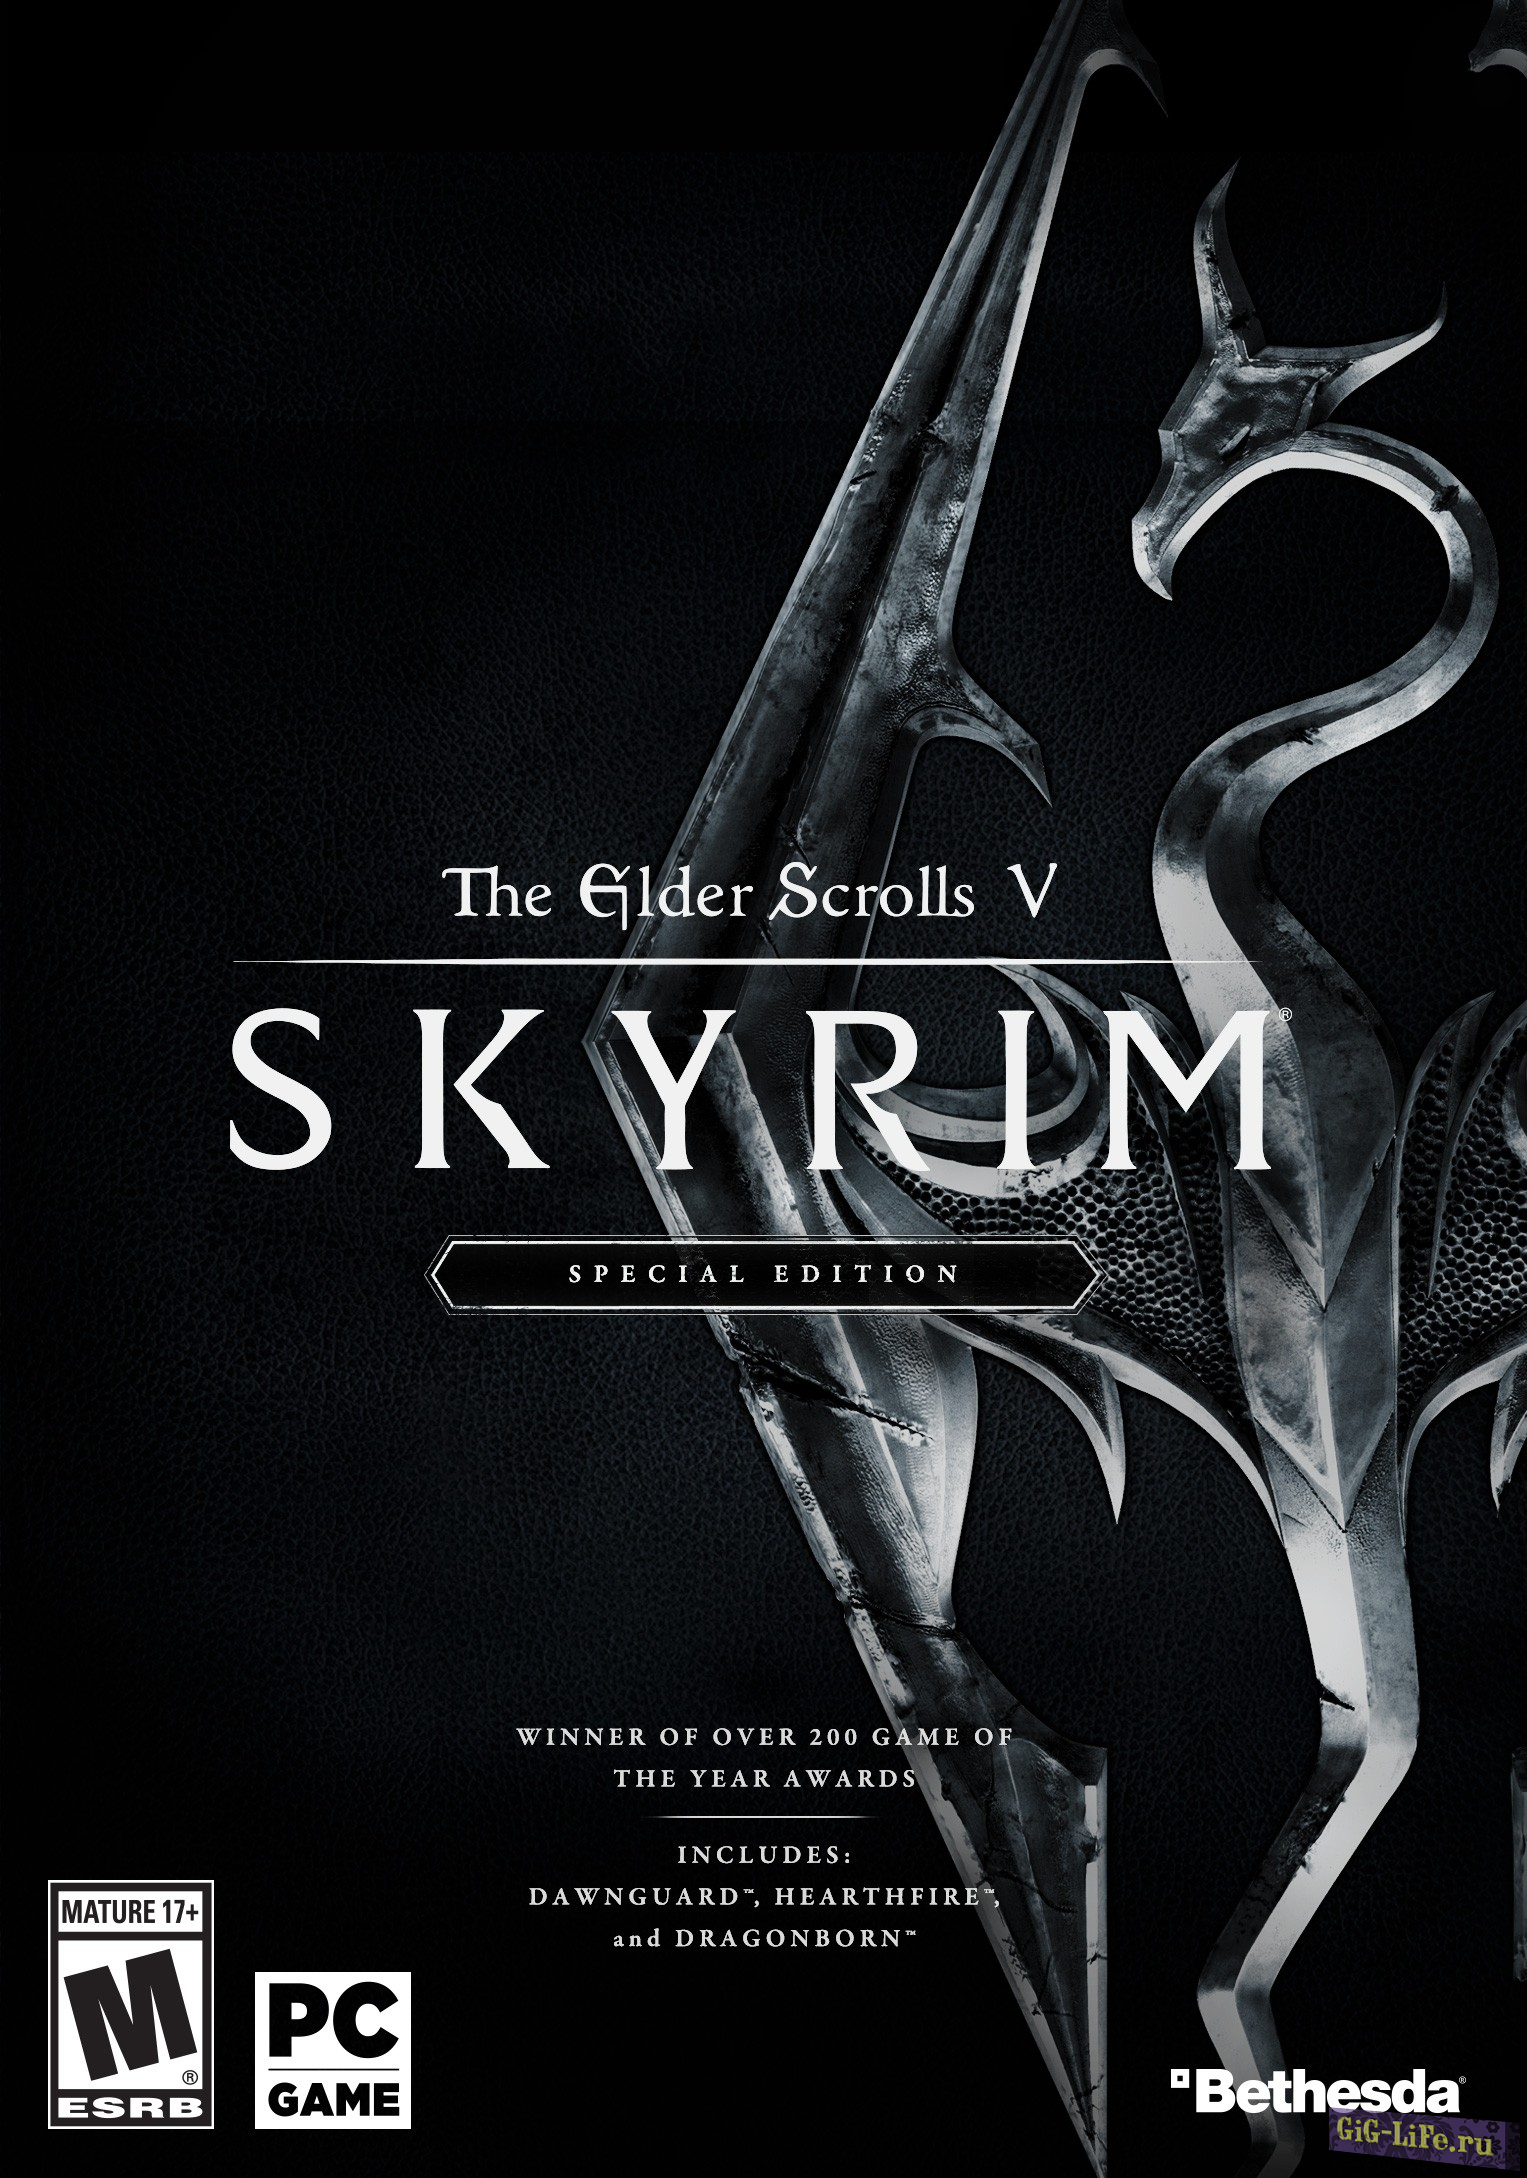 The Elder Scrolls V: Skyrim - Special Edition [v 1.5.80.0.8] (2016) PC